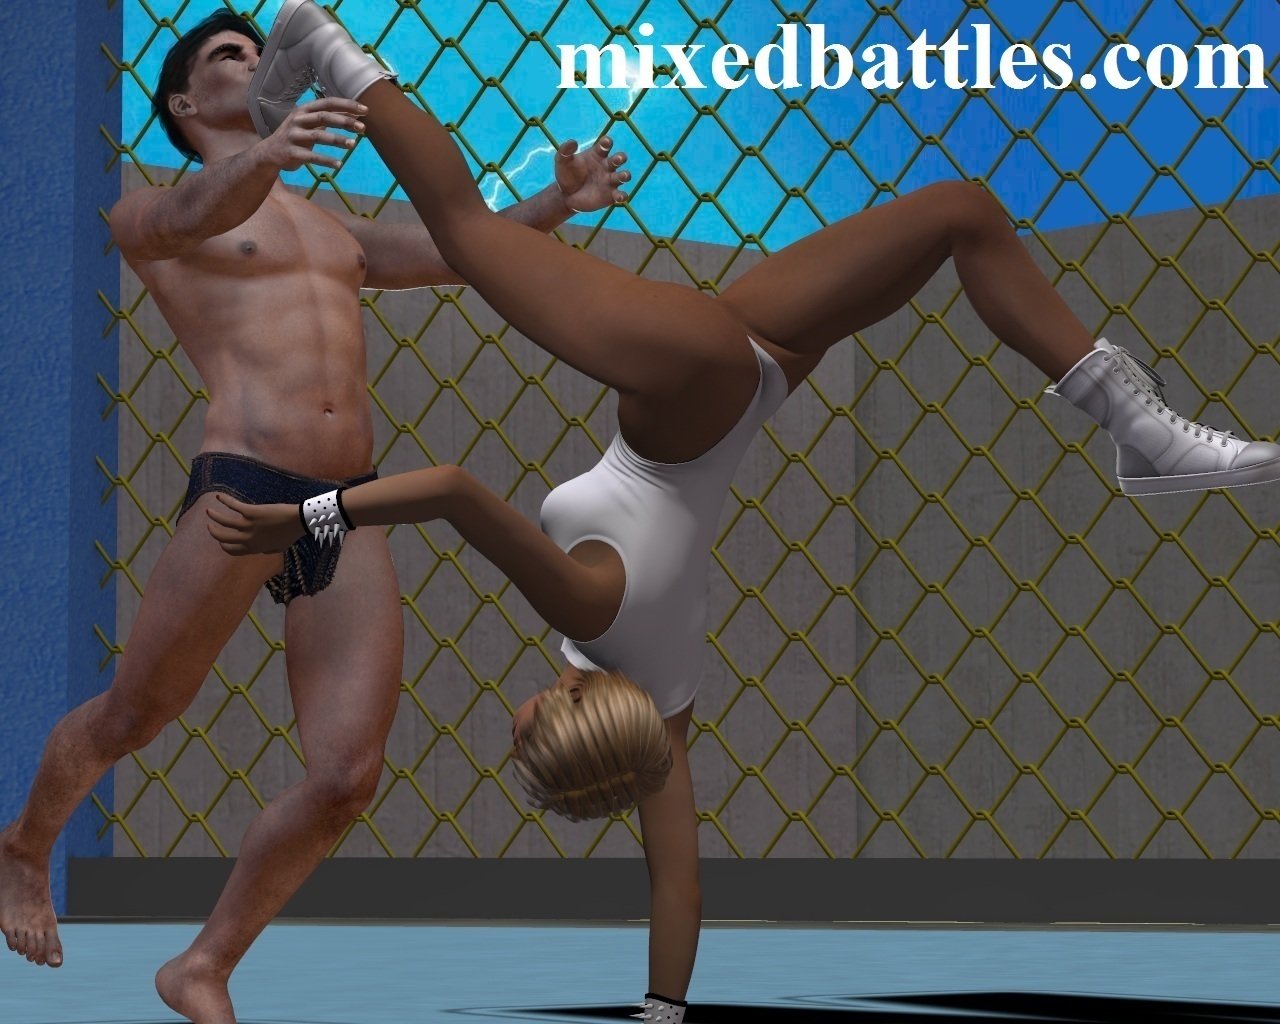 mixed kickboxing leotard girl kneed him in the balls